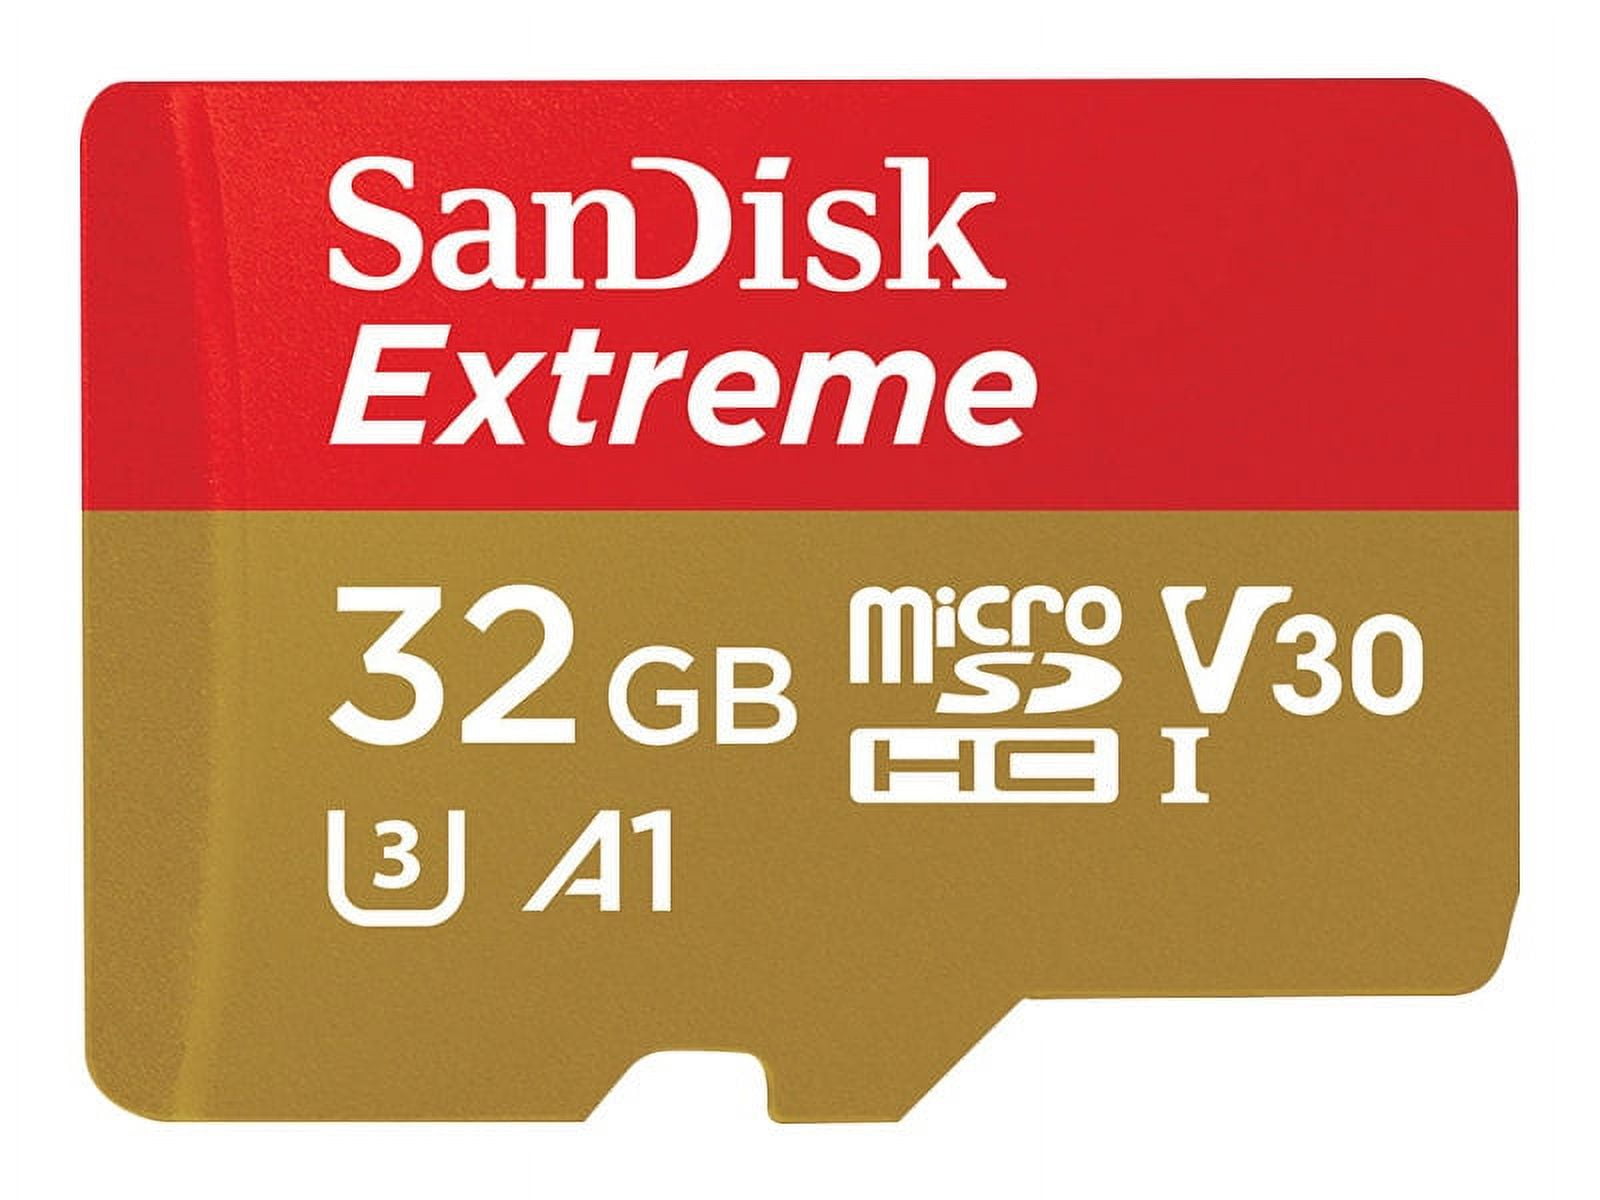 SanDisk micro SDXC Extreme Pro 128GB 200MB/s V30 - Foto Erhardt